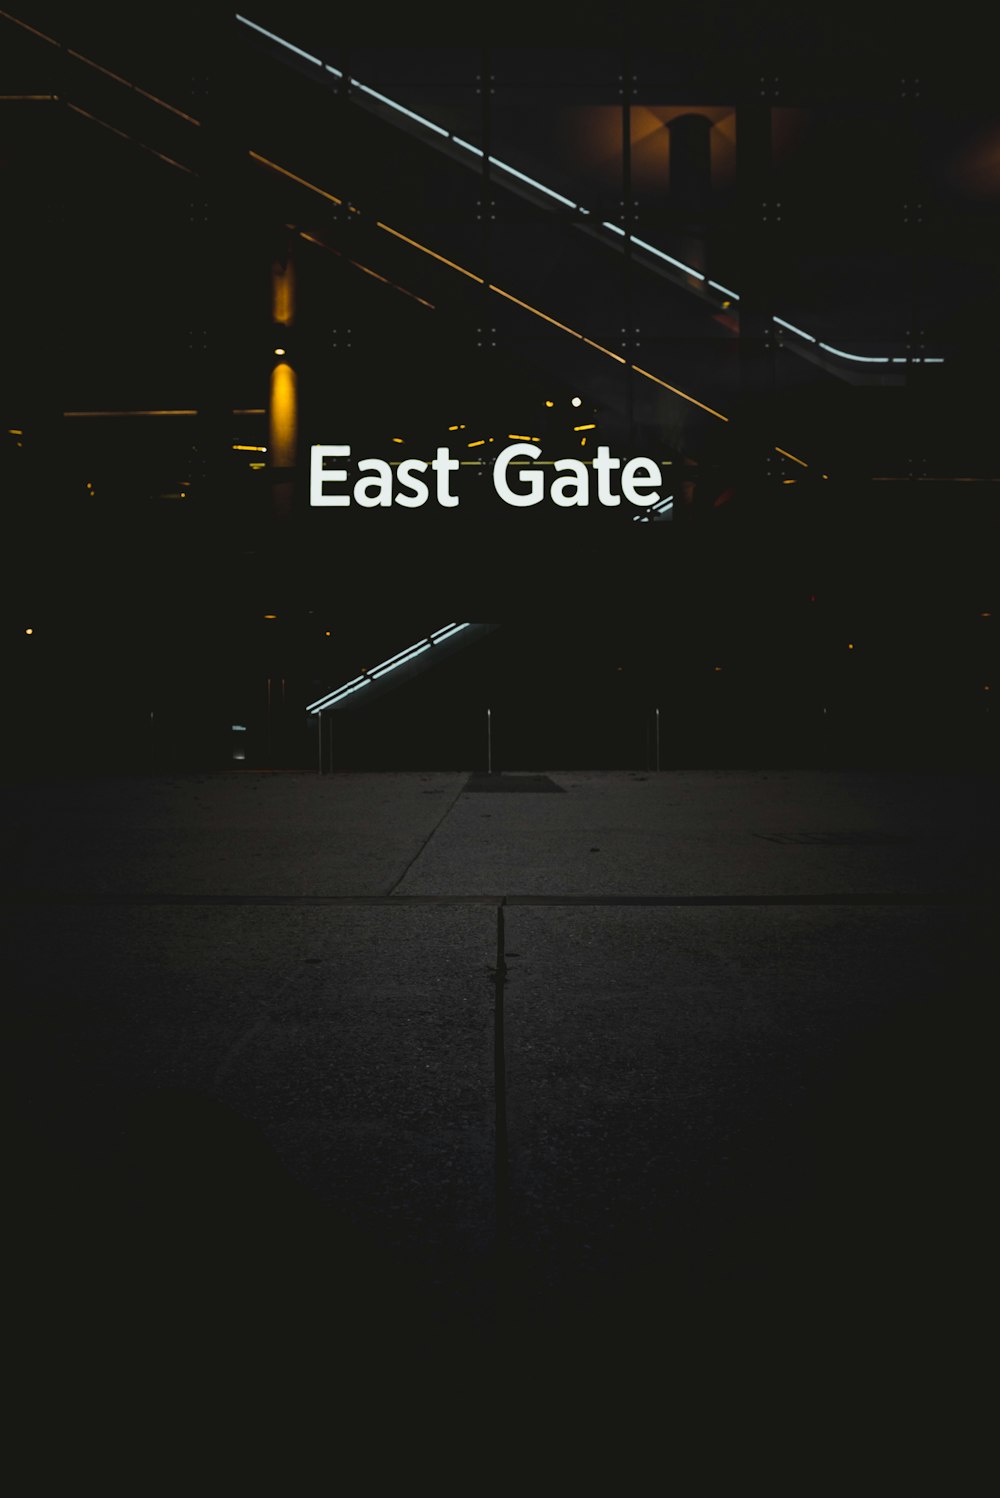 East Gate logo with dim light